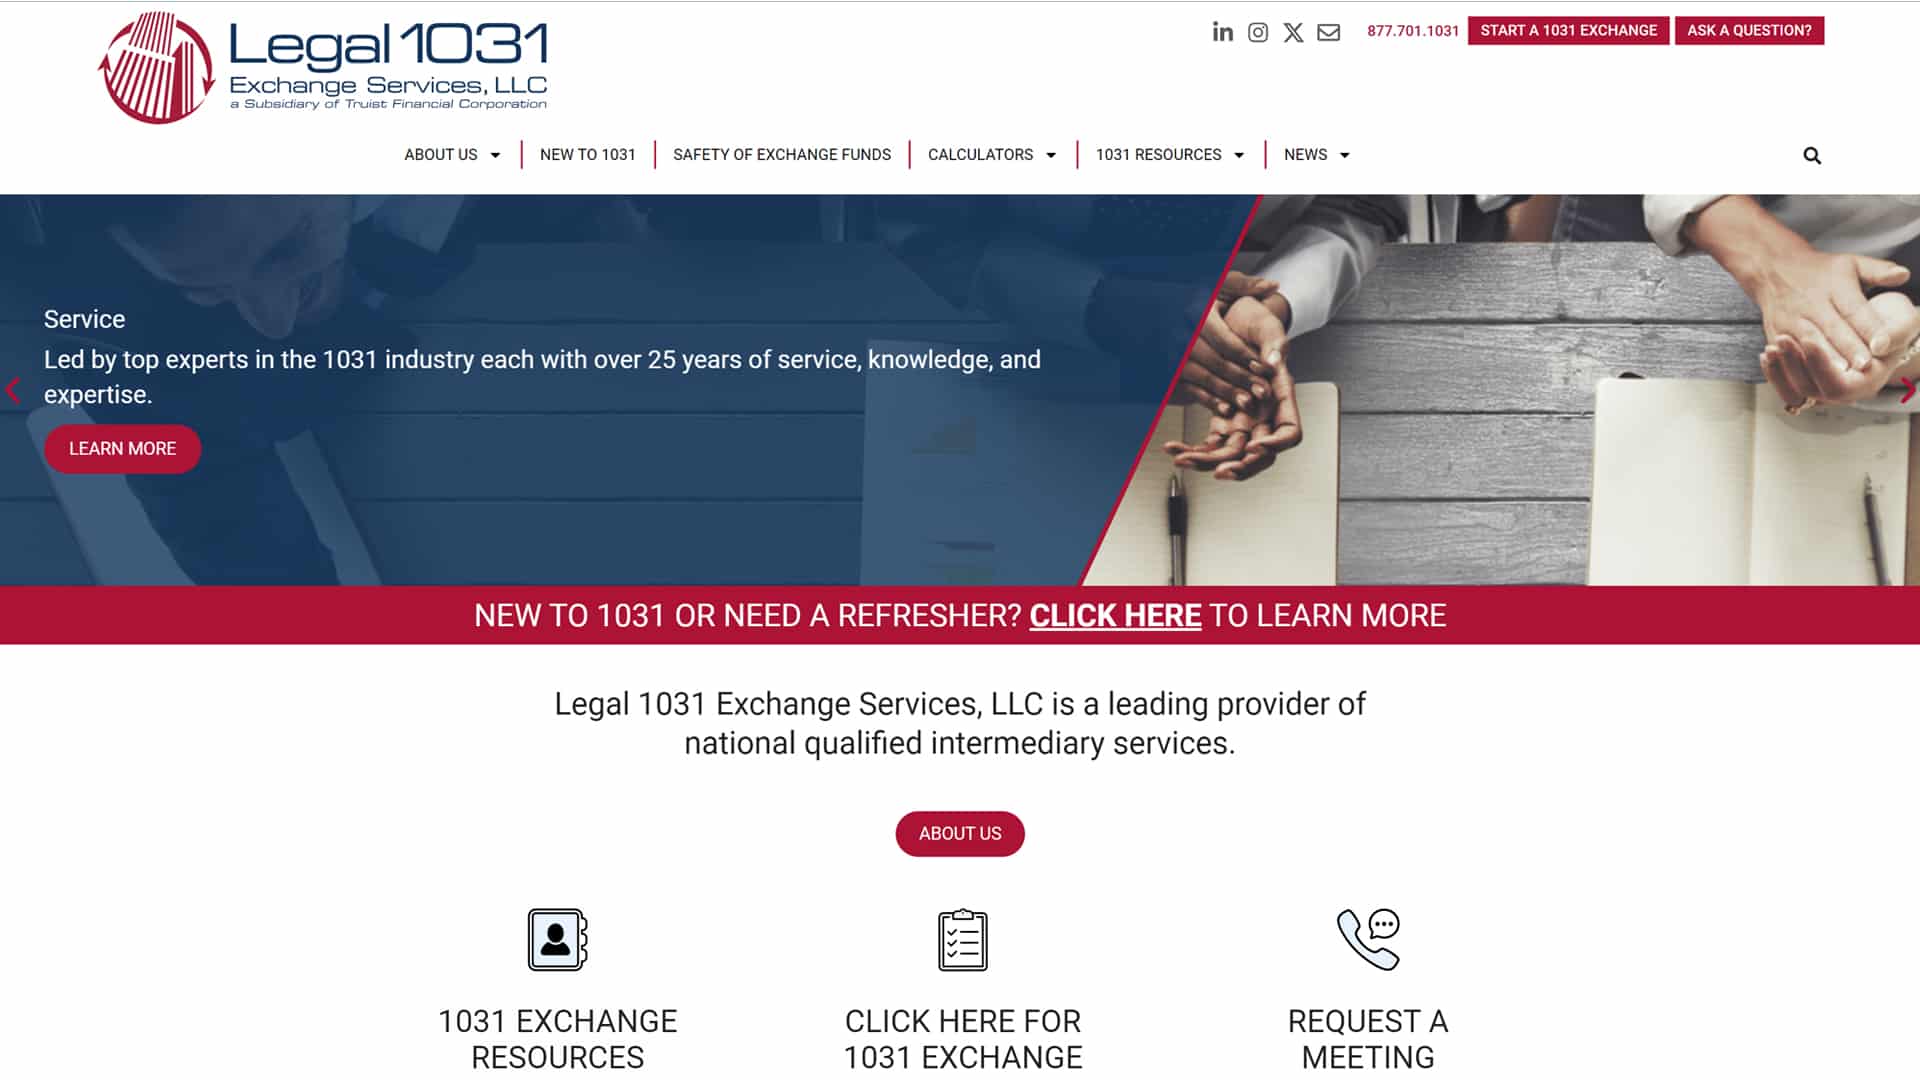 Legal1031 website design image for banner view.